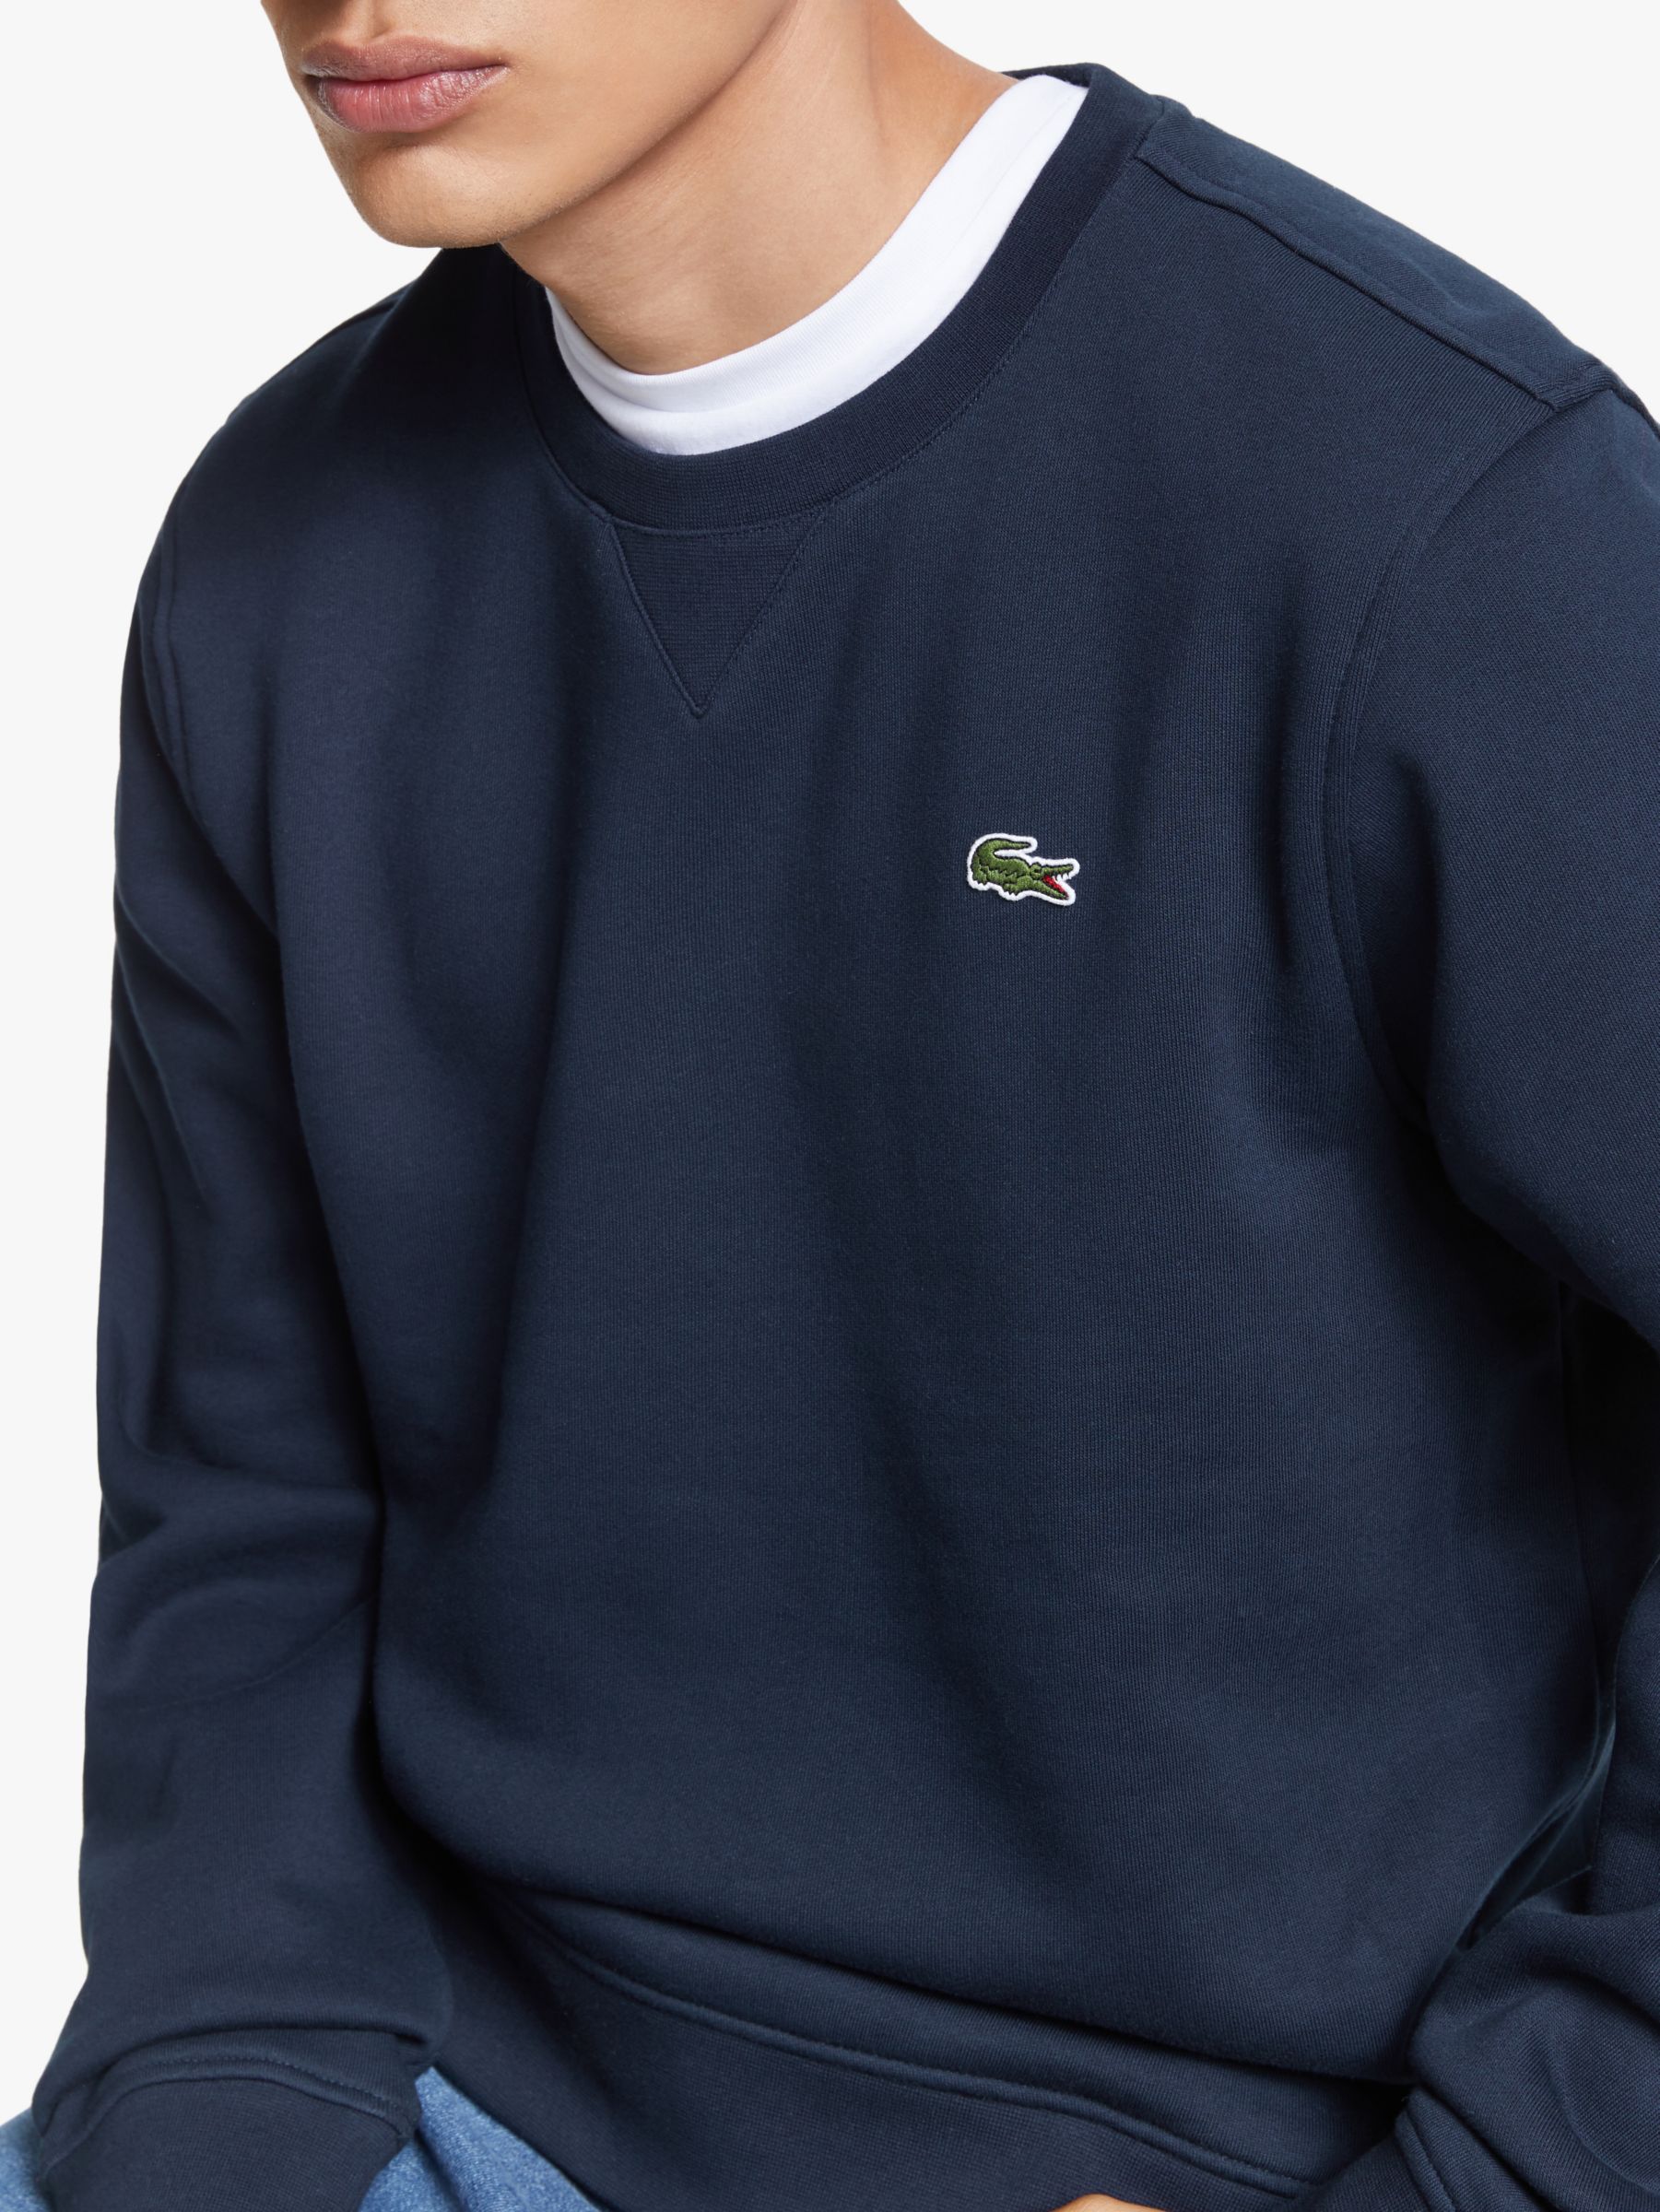 lacoste navy blue sweatshirt